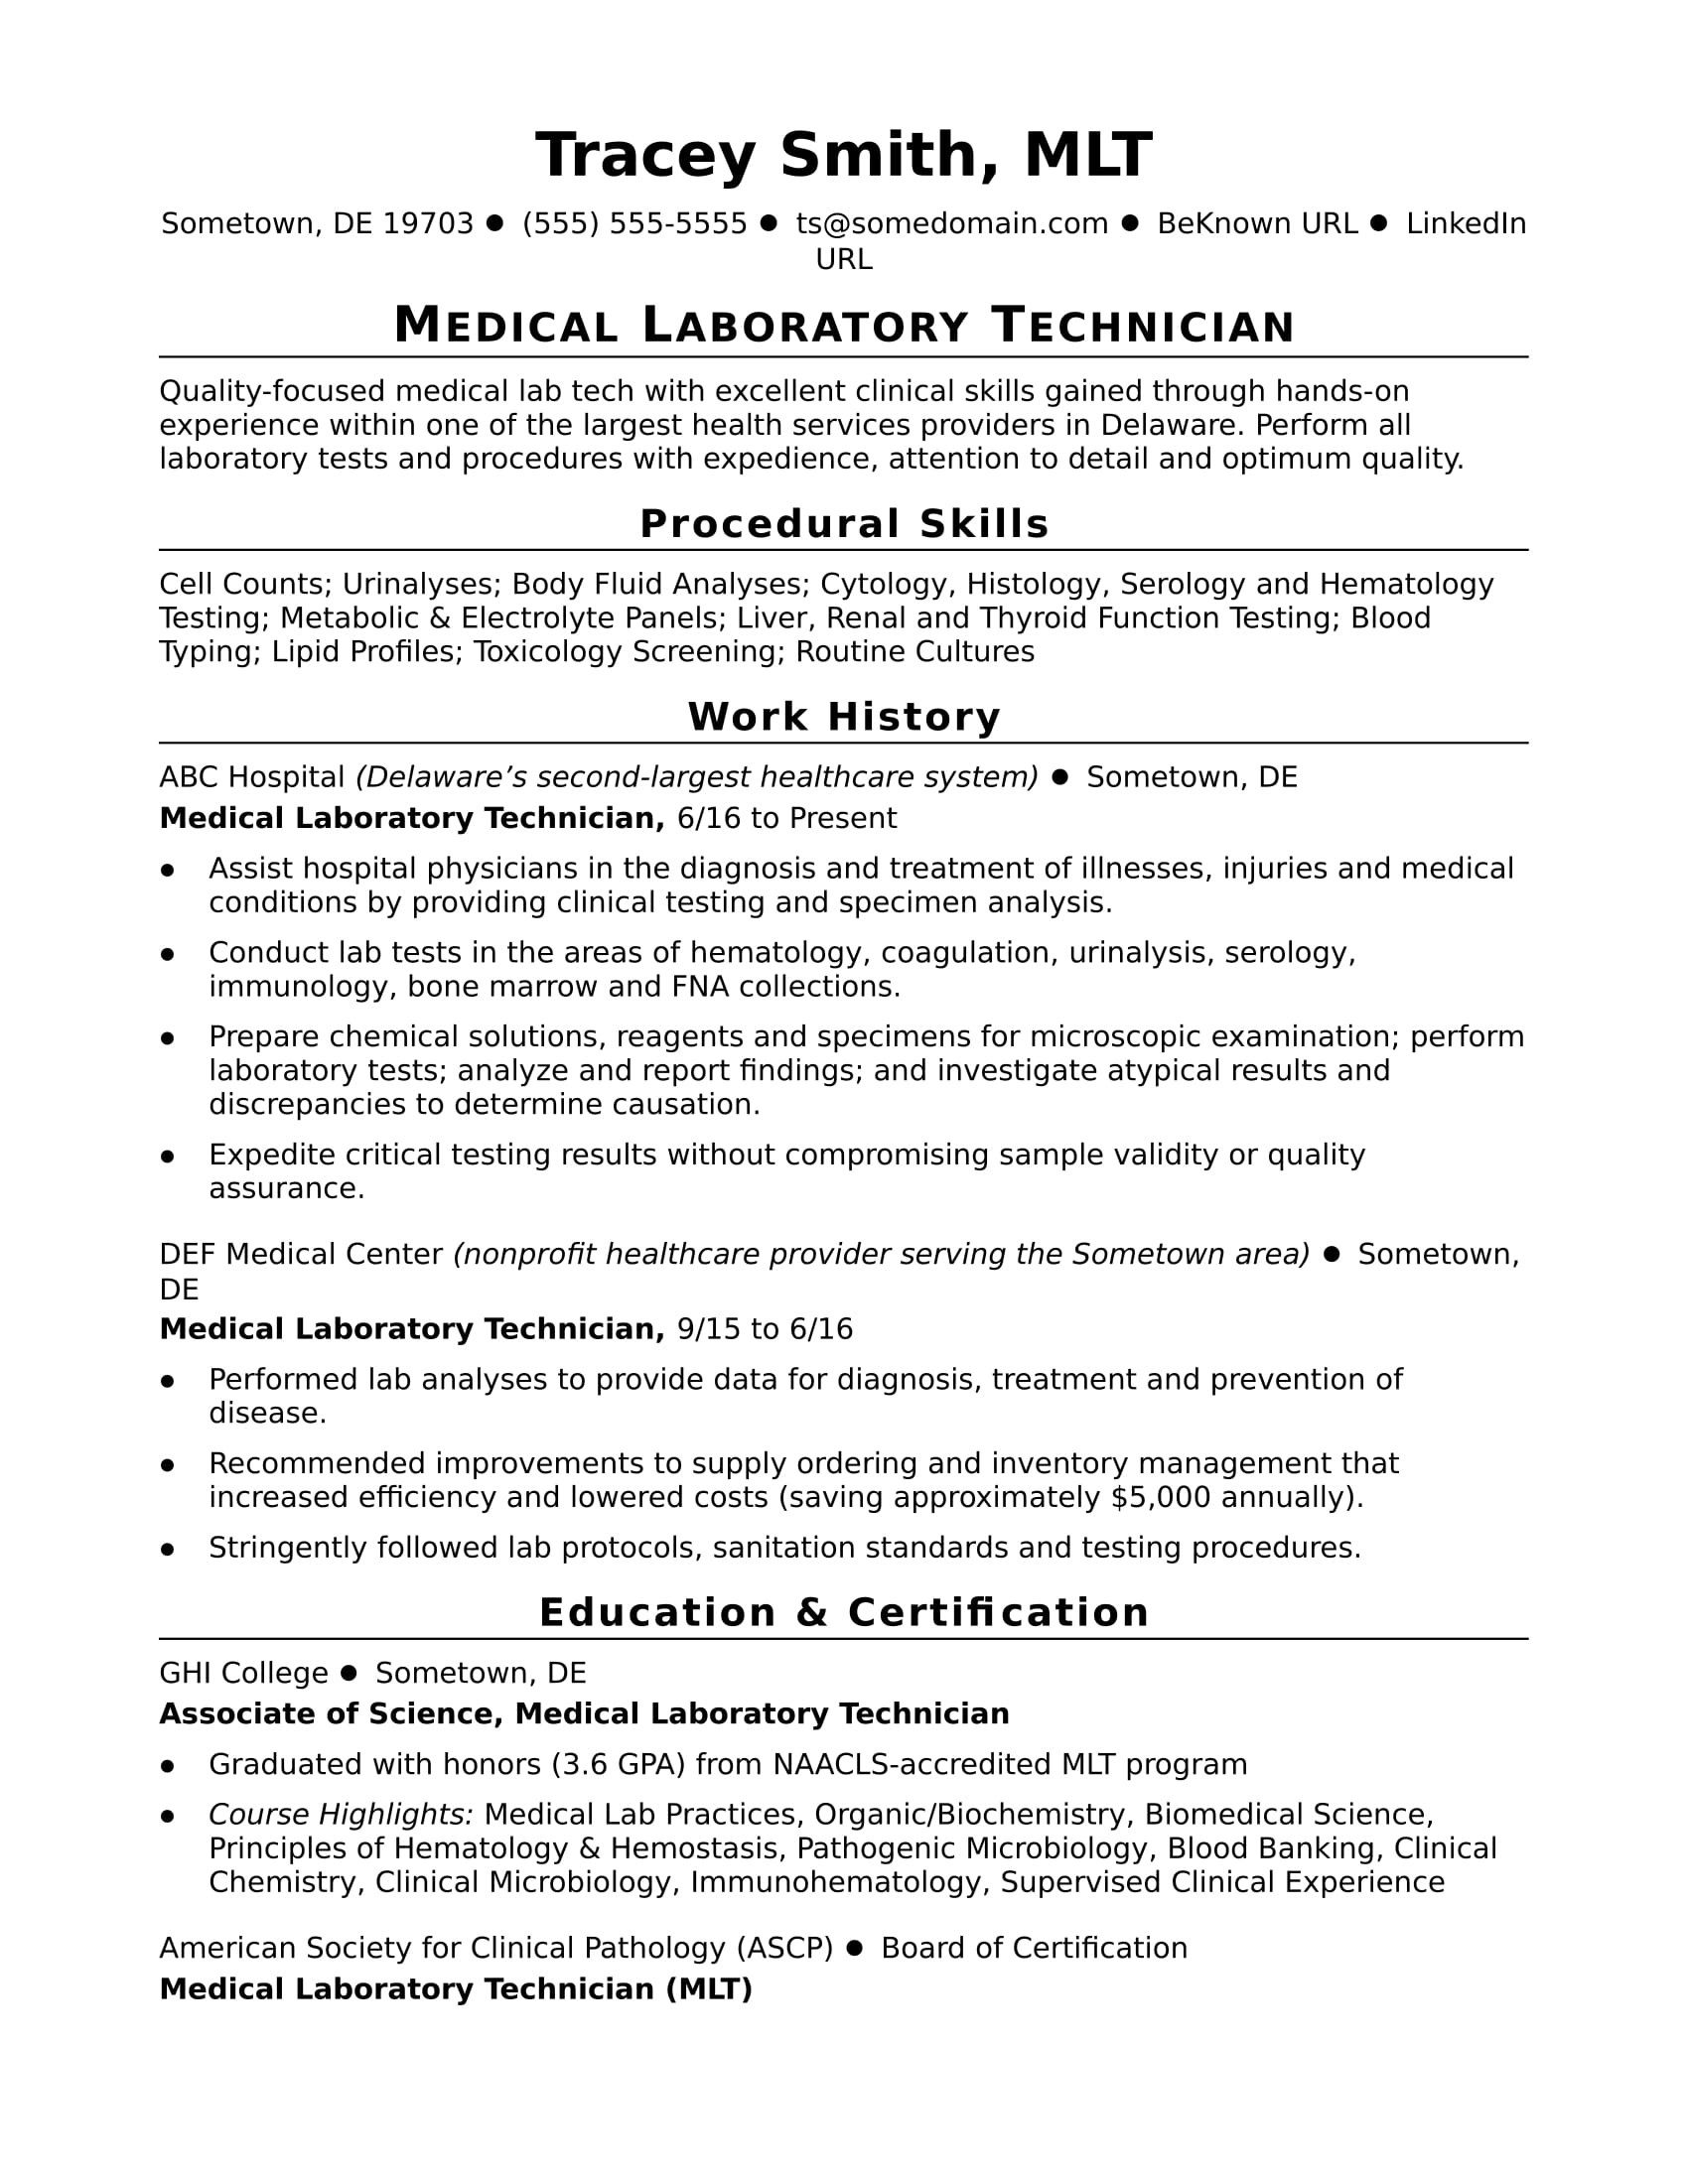 Resume Samples Objective for Technical Field Sample Lab Technician Resume Monster.com